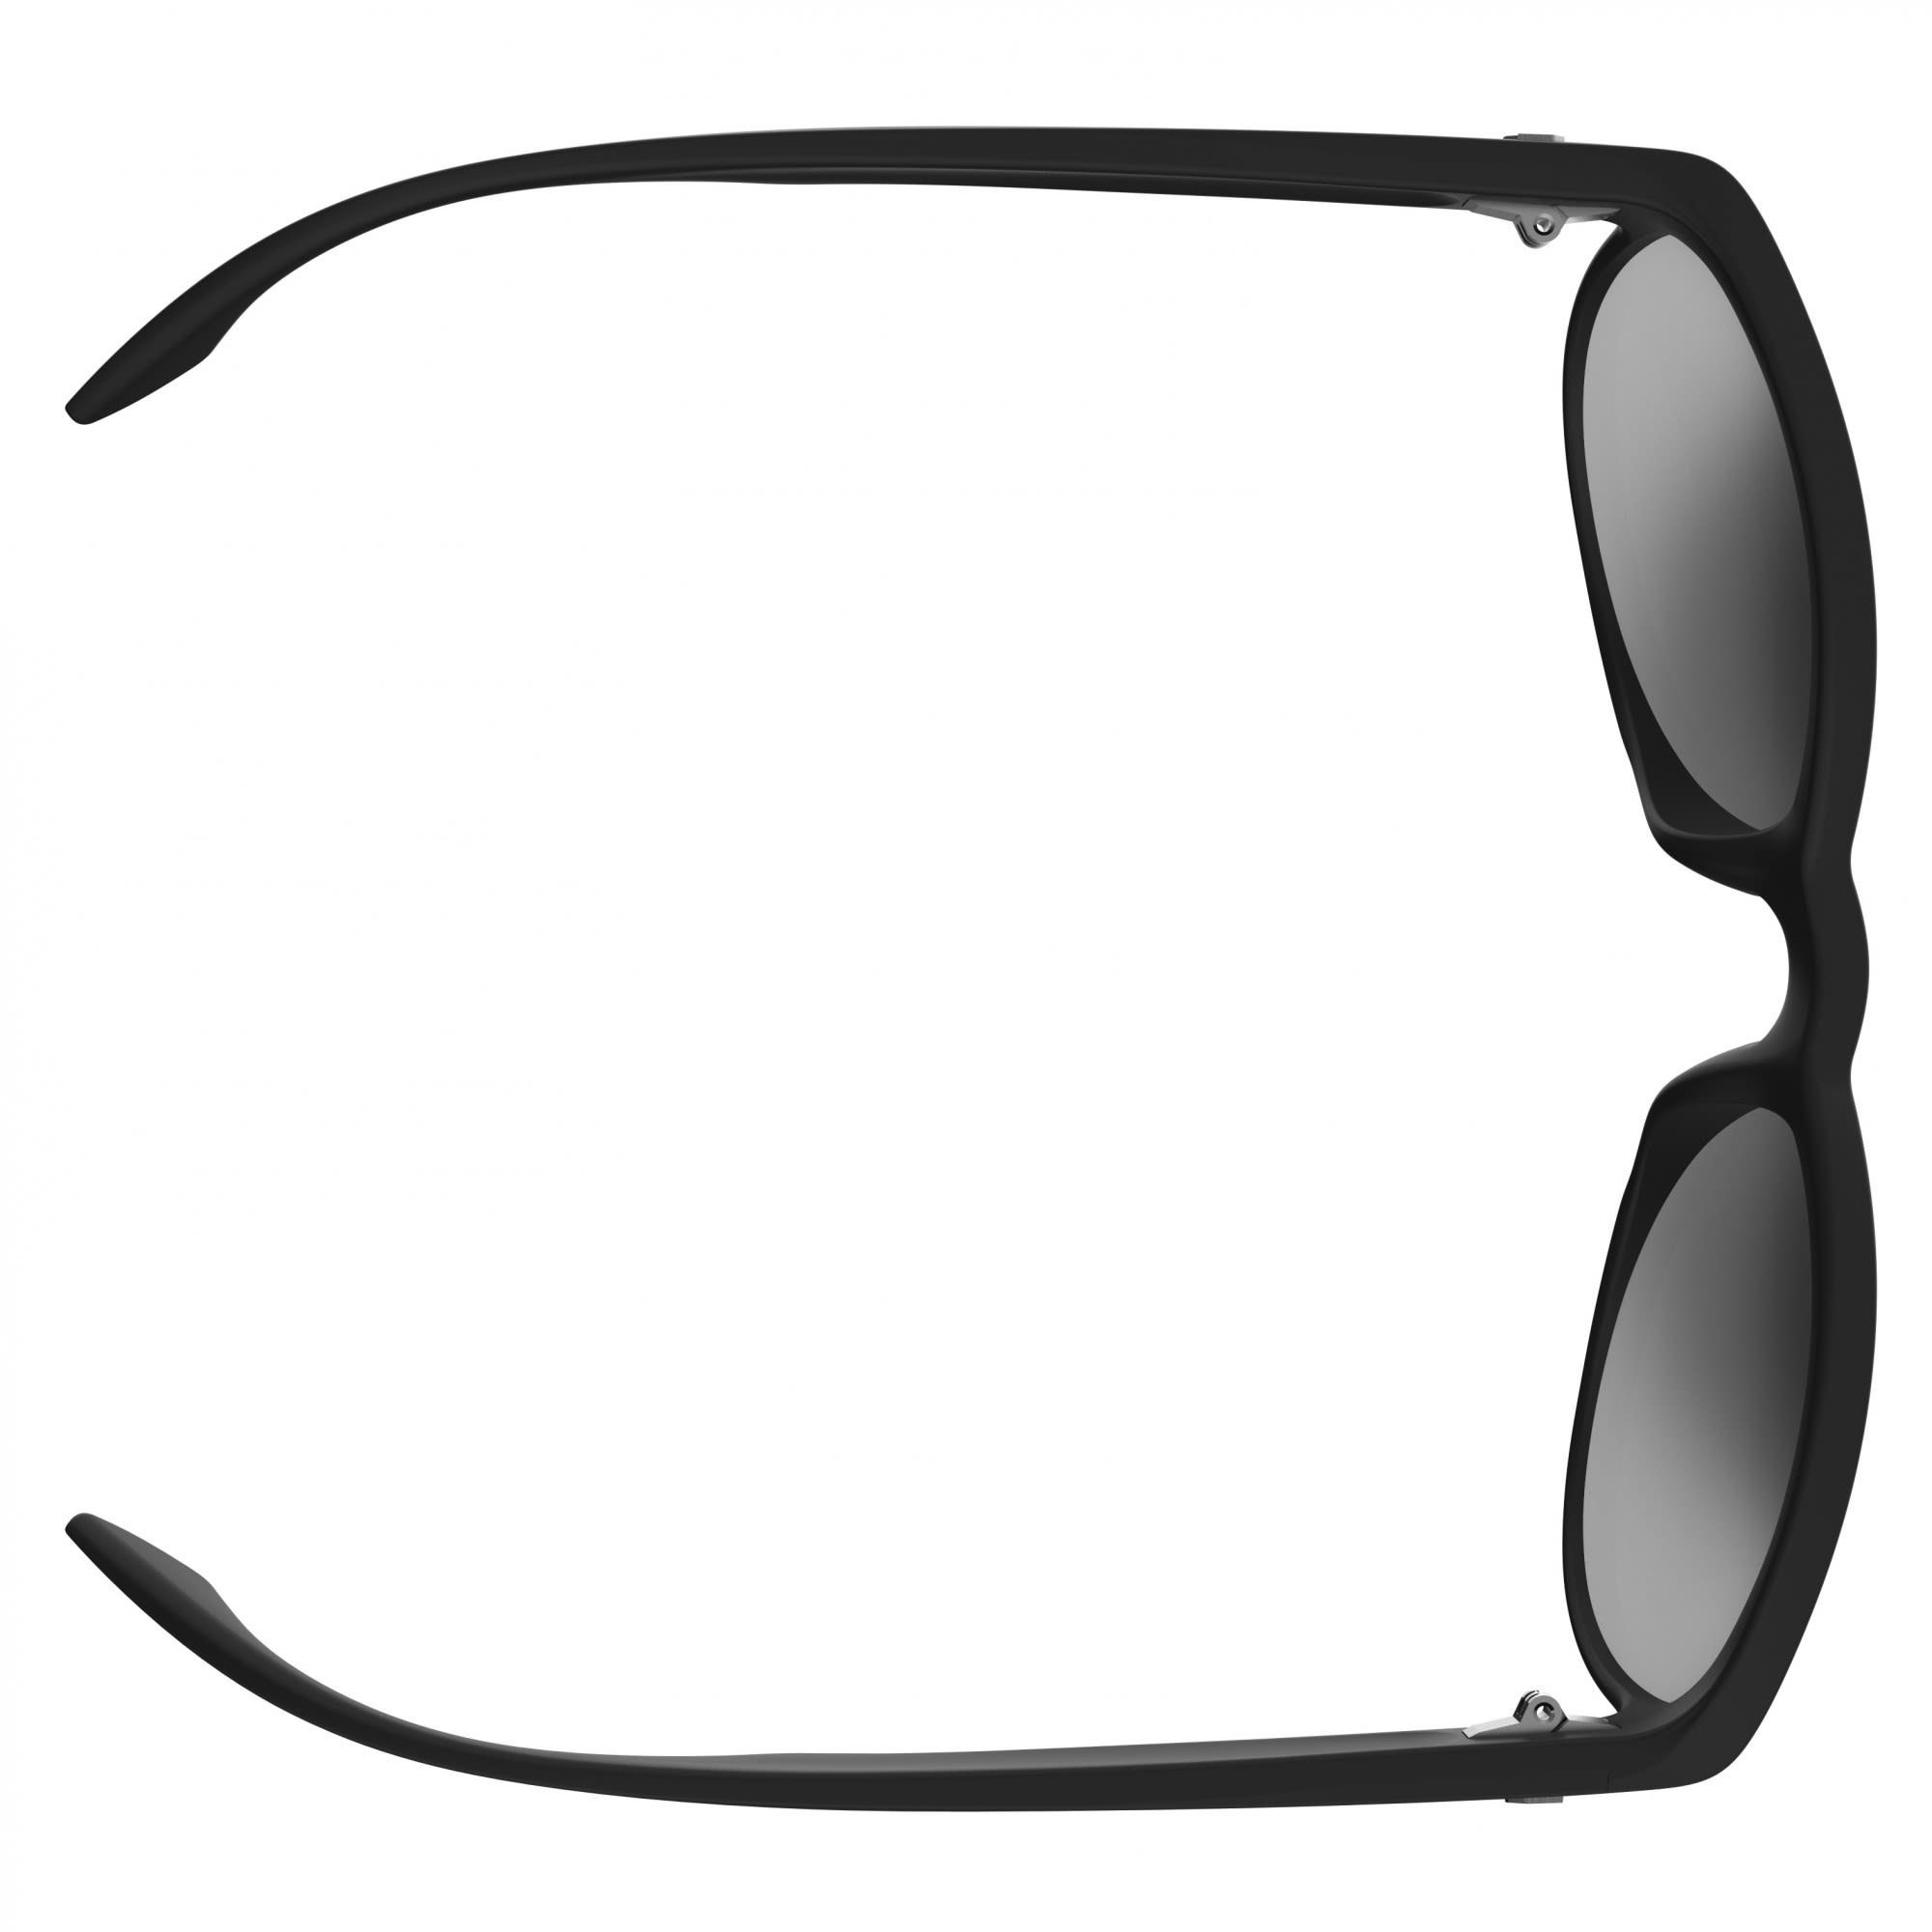 Scott - Scott Accessoires Sonnenbrille Sunglasses Black Sway Grey Matt